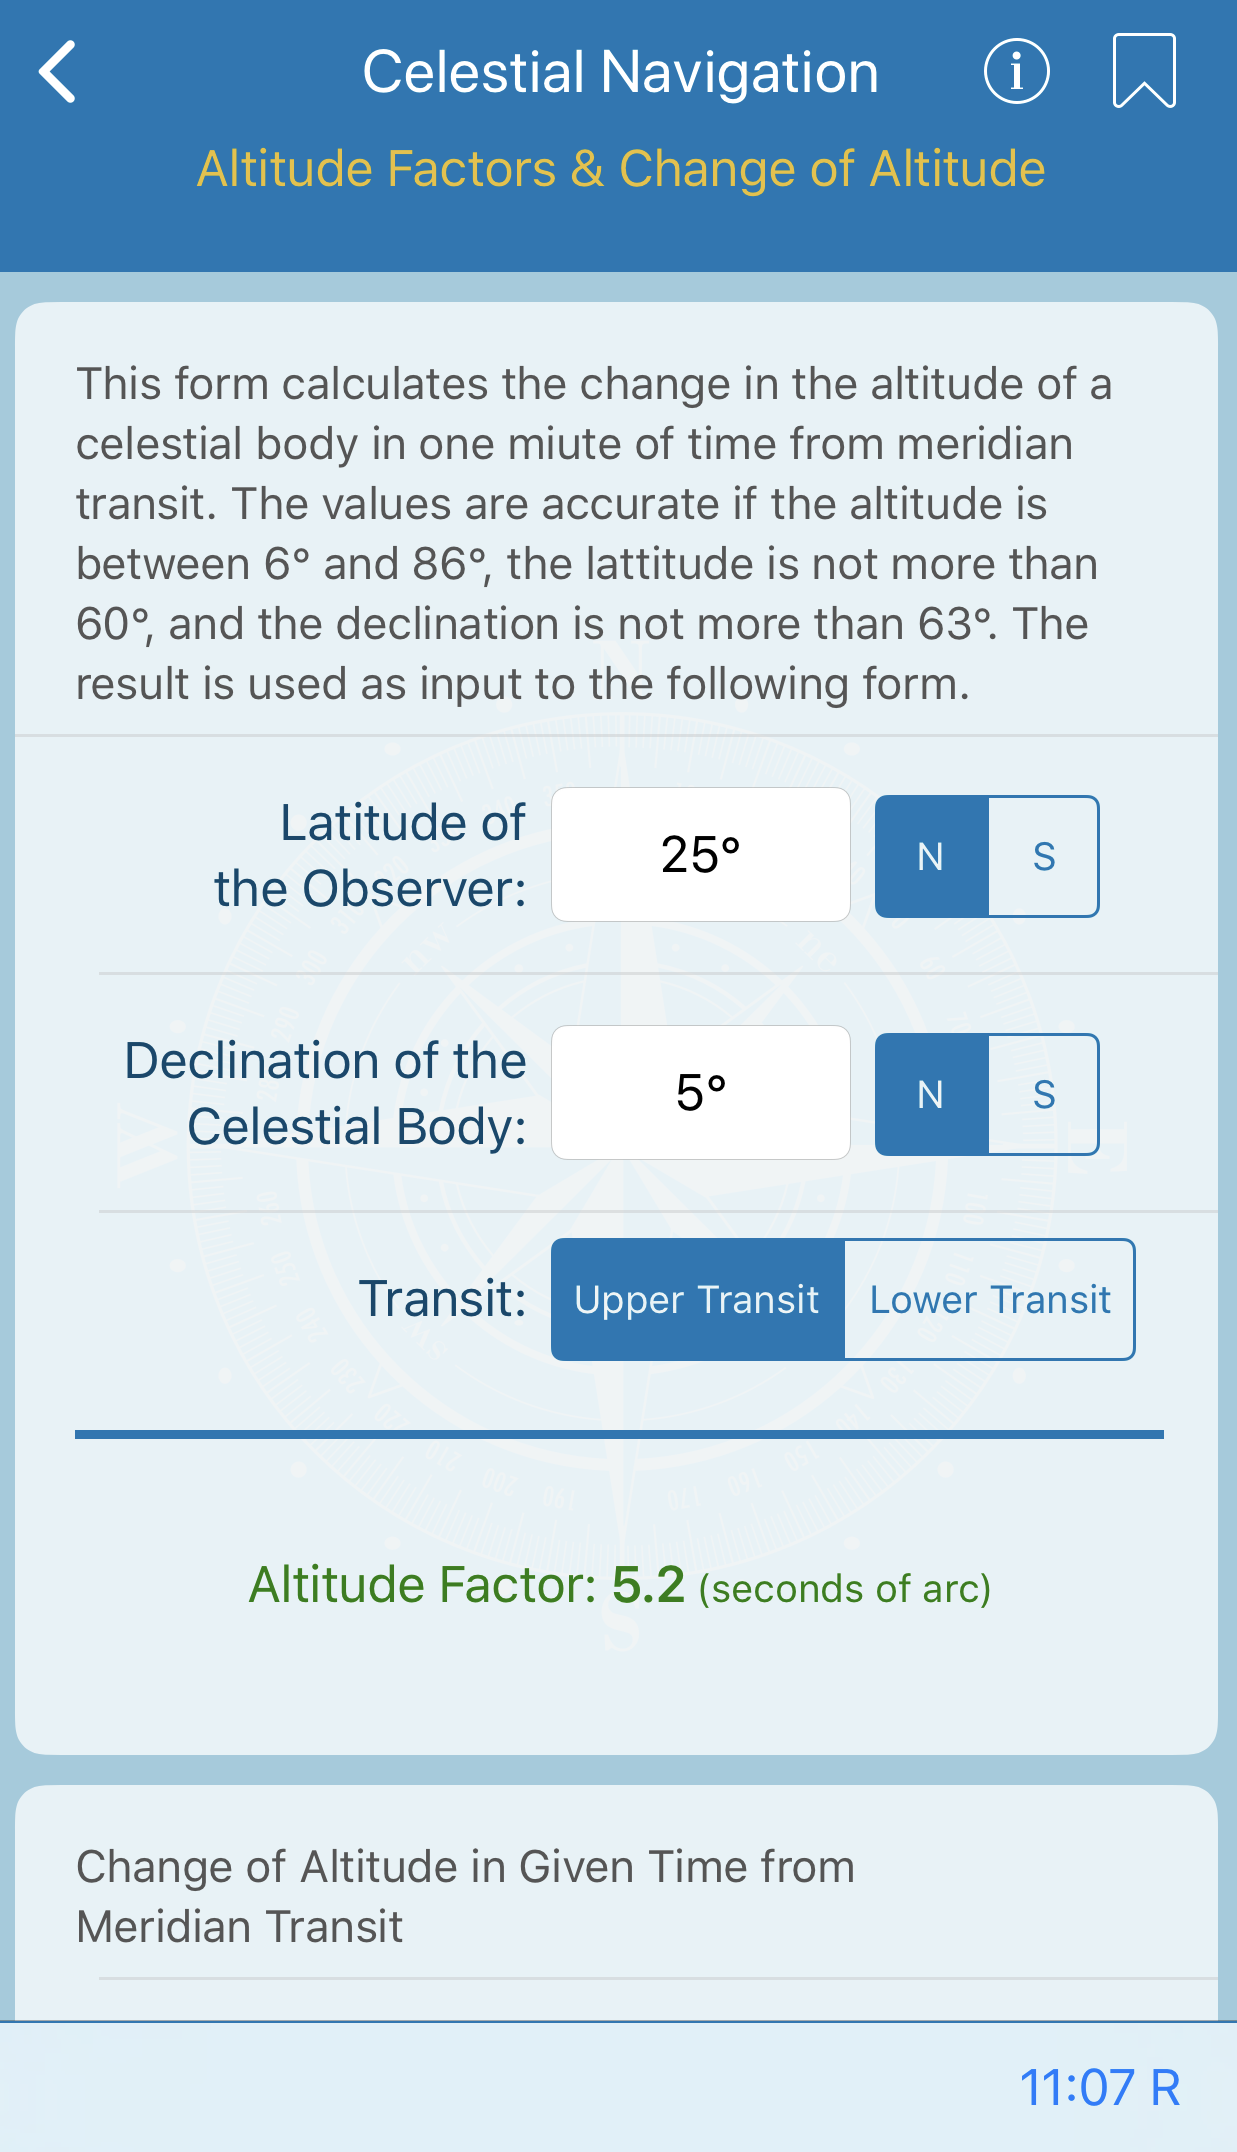 Altitude Factors & Change of Altitude